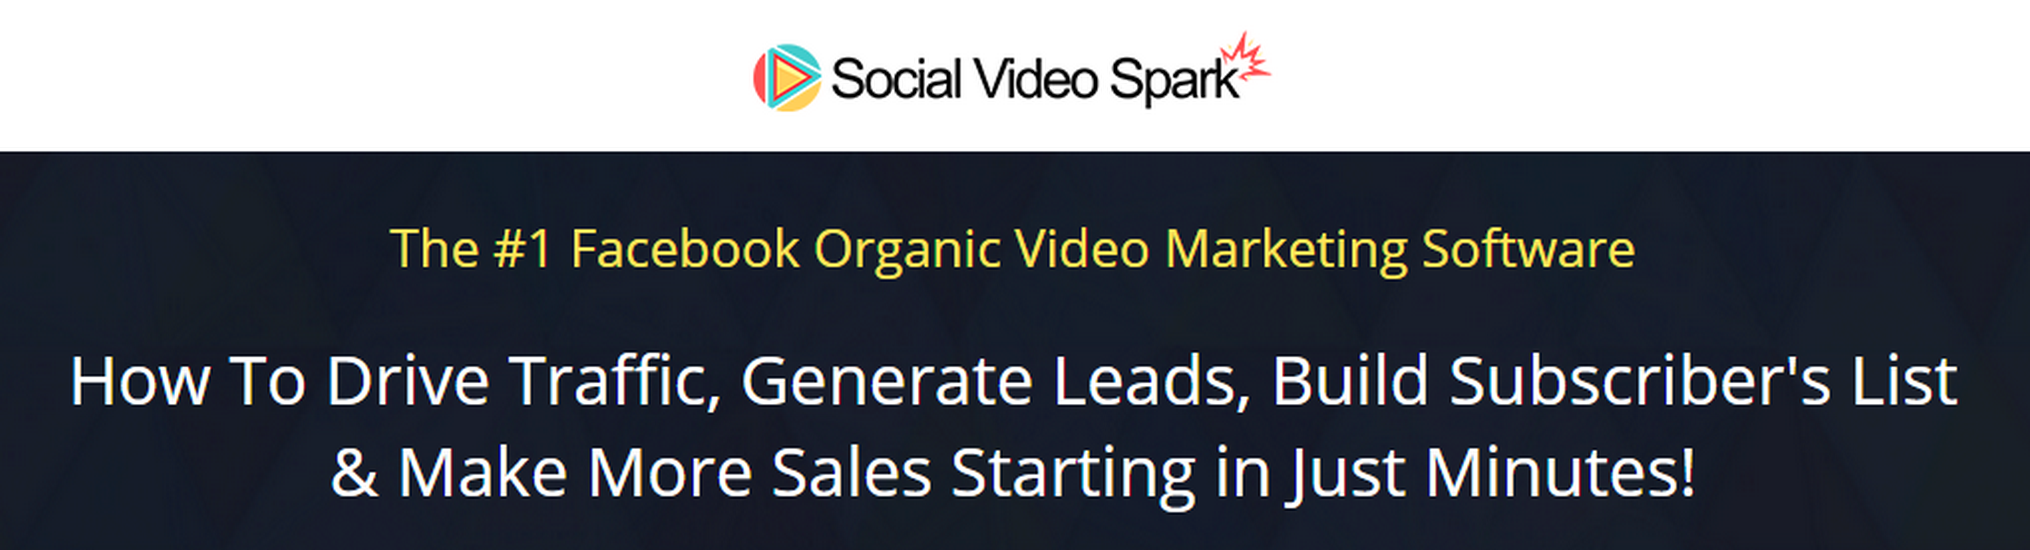 social-video-spark-demo